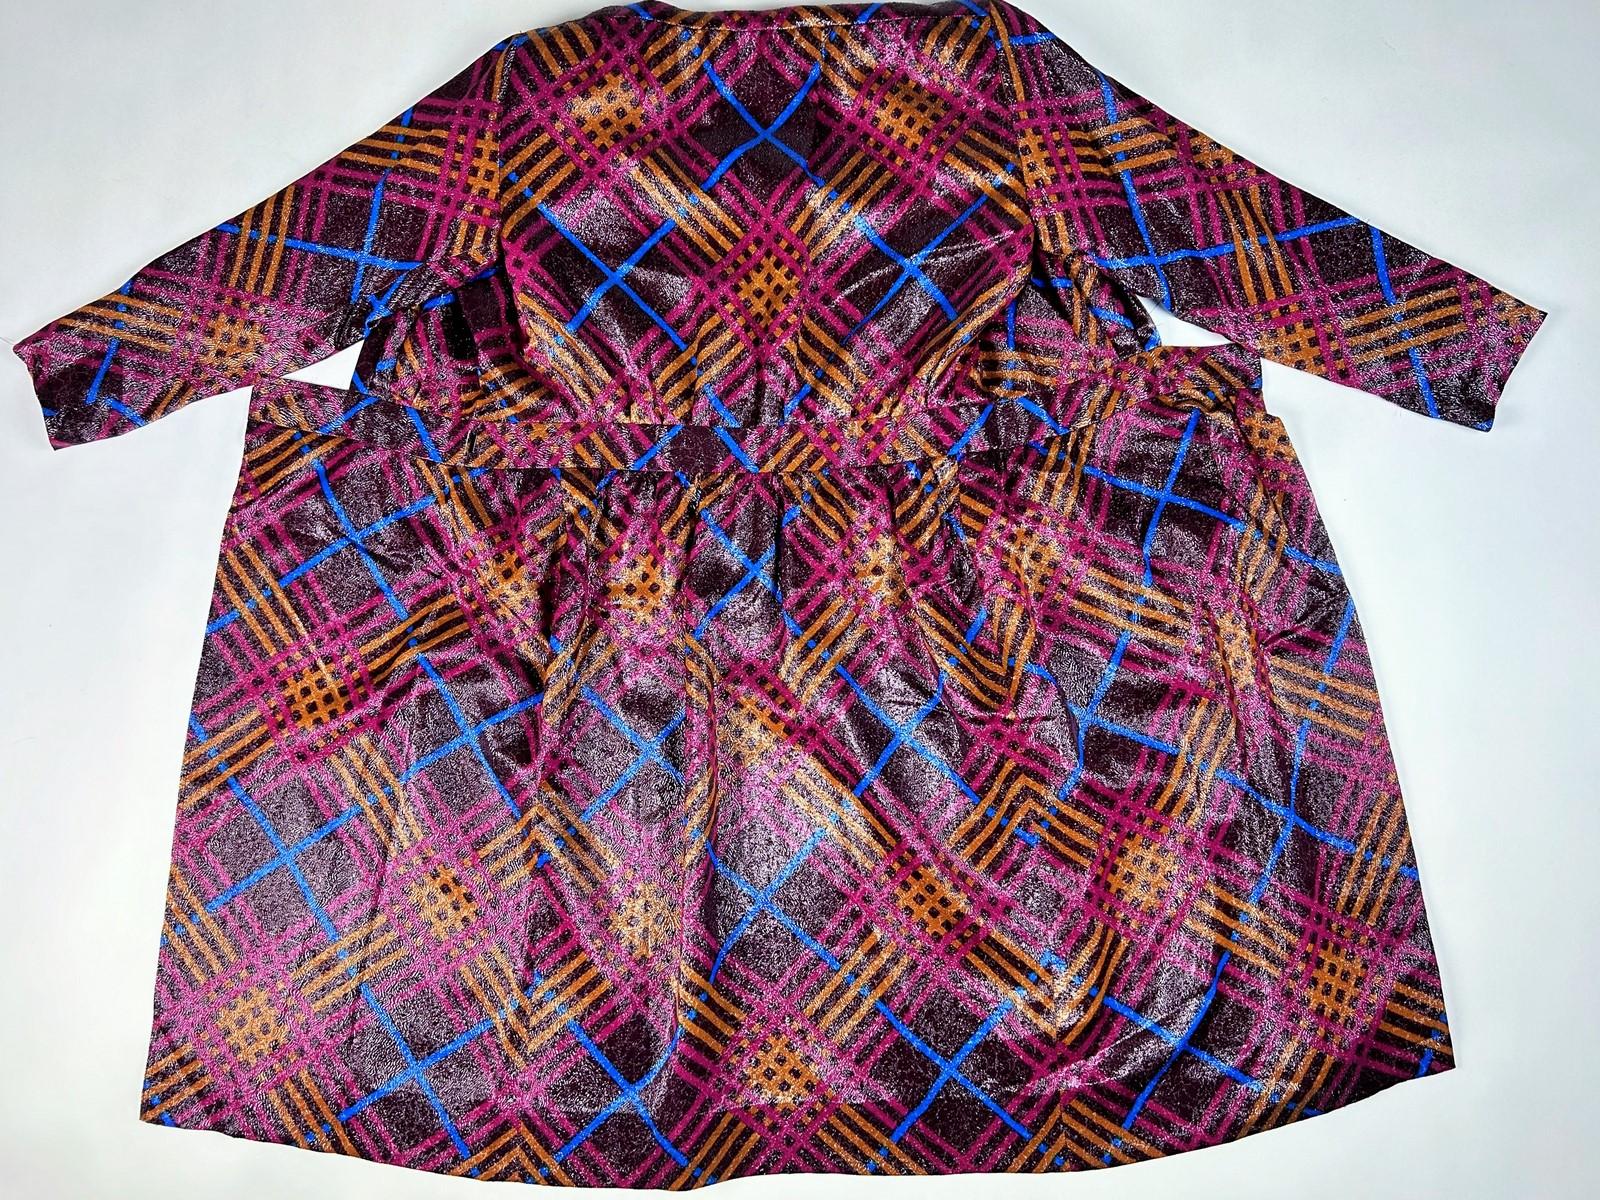 Yves Saint Laurent Rive Gauche dress in lurex lamé with checks Circa 1990 For Sale 9